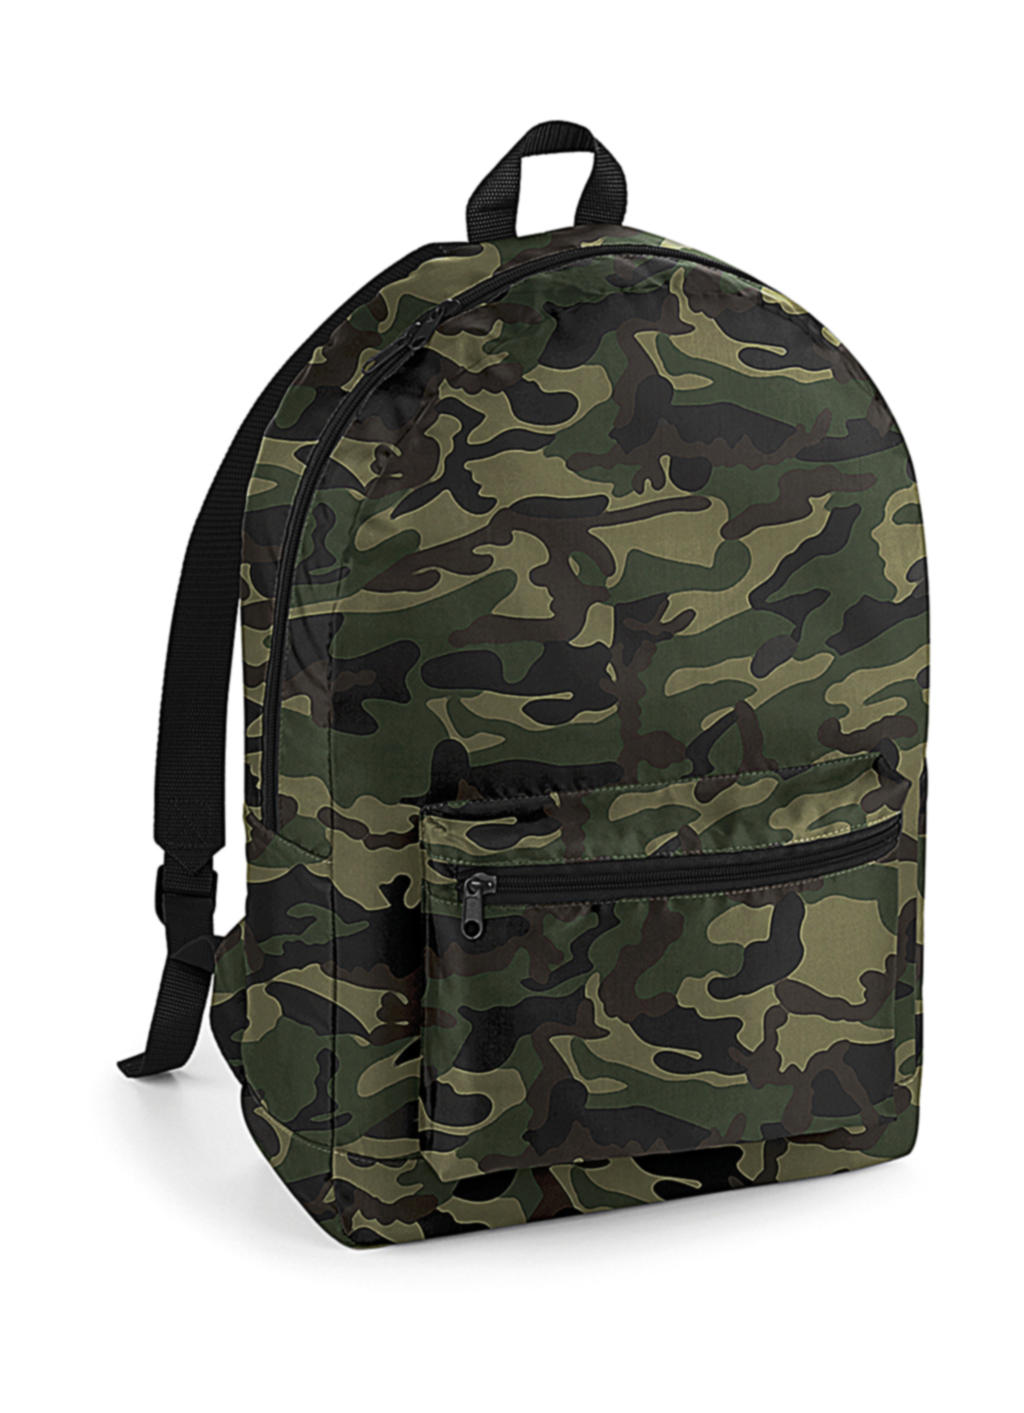  Packaway Backpack in Farbe Jungle Camo/Black